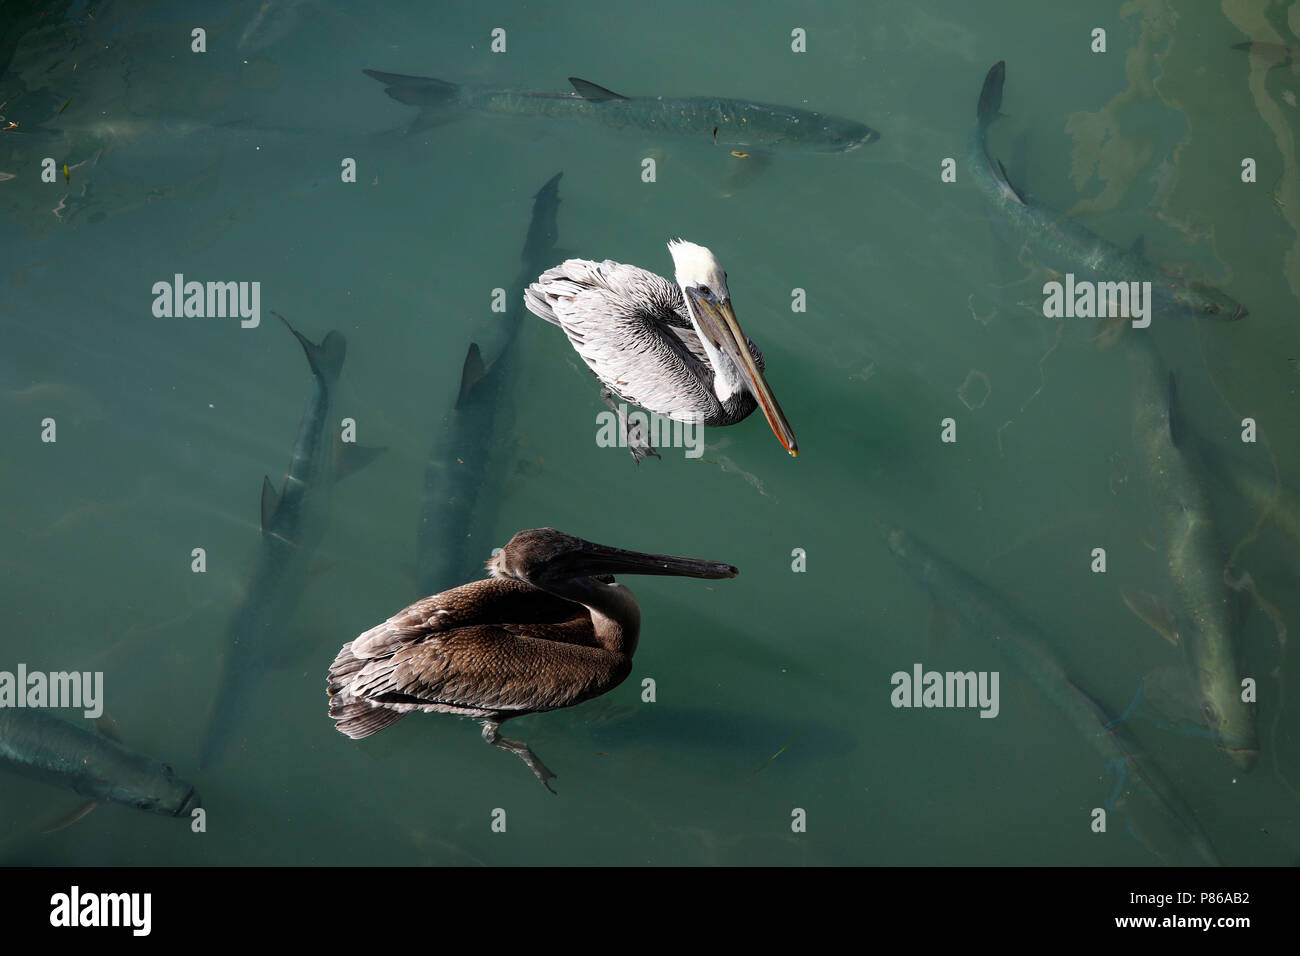 Bruine pelikaan; Braune Pelikan Stockfoto